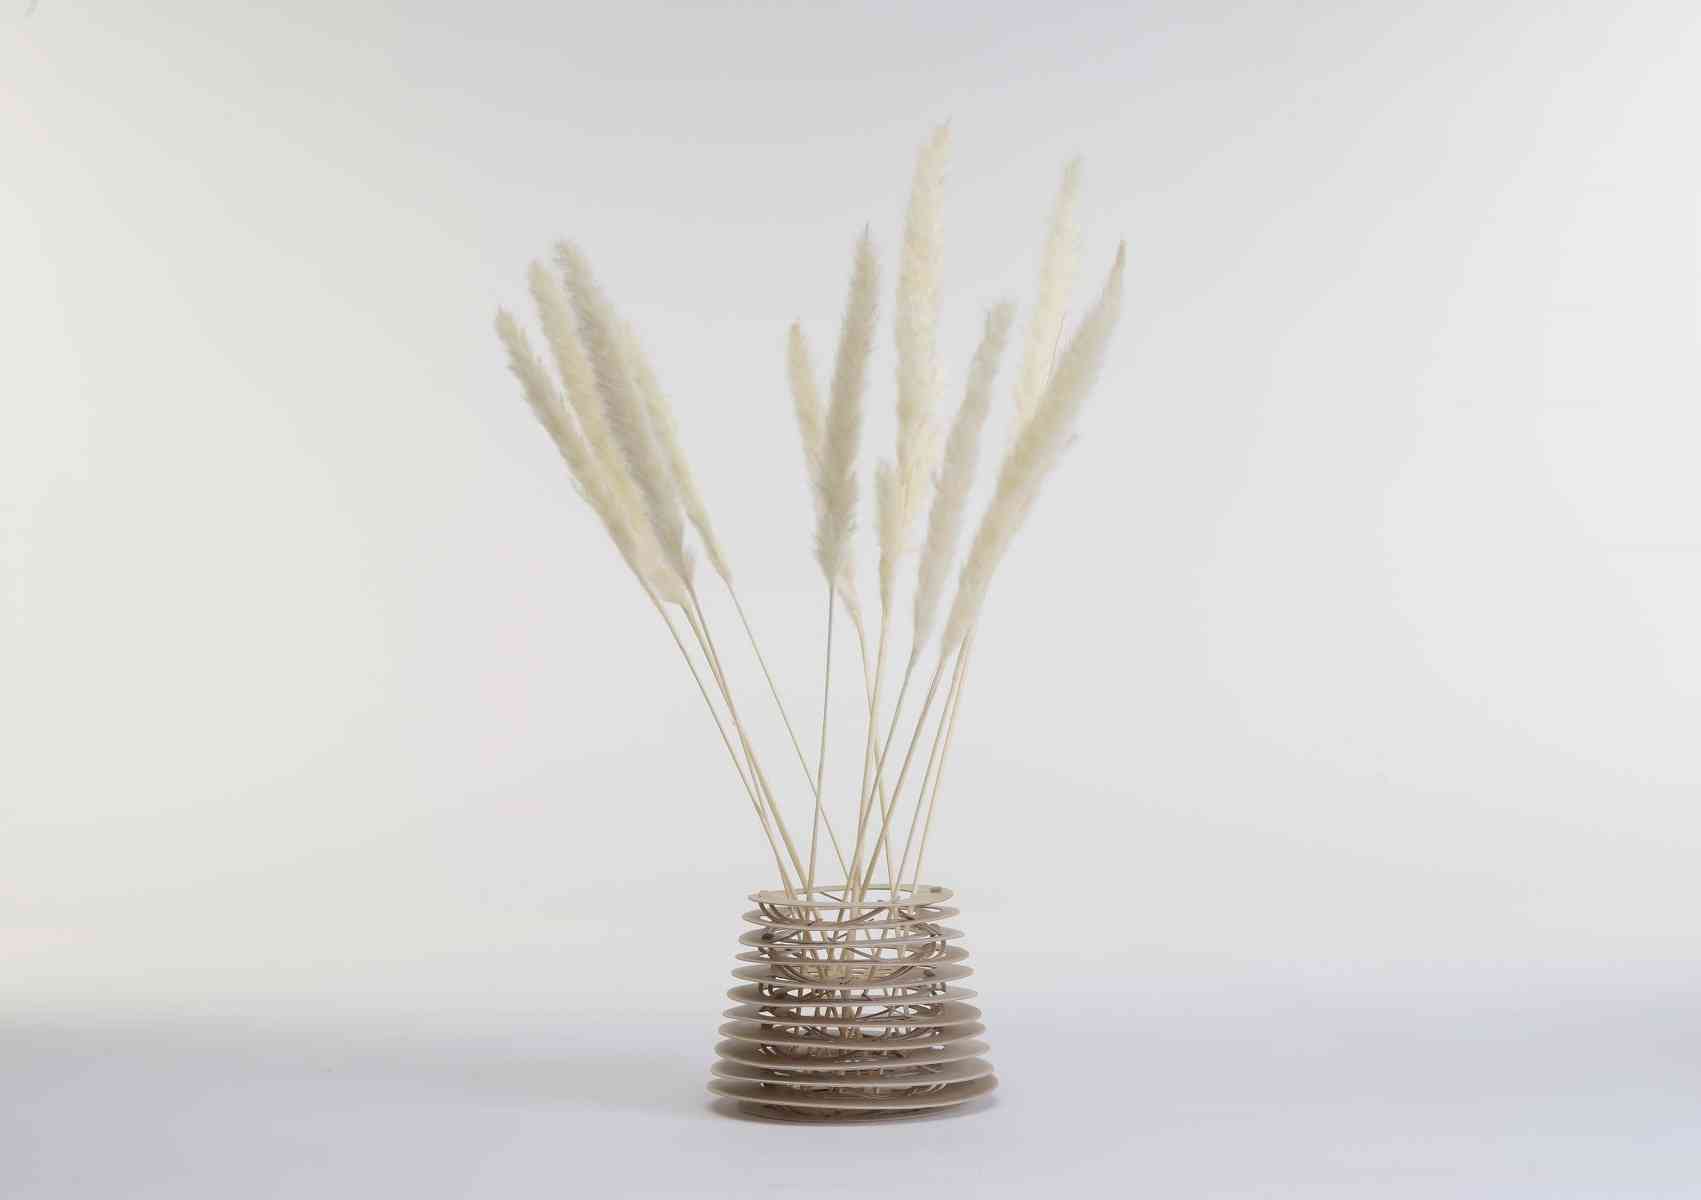 James Fender: Digital cut plywood vase - Flower vase made of aero plywood sheets using digital cutting process.